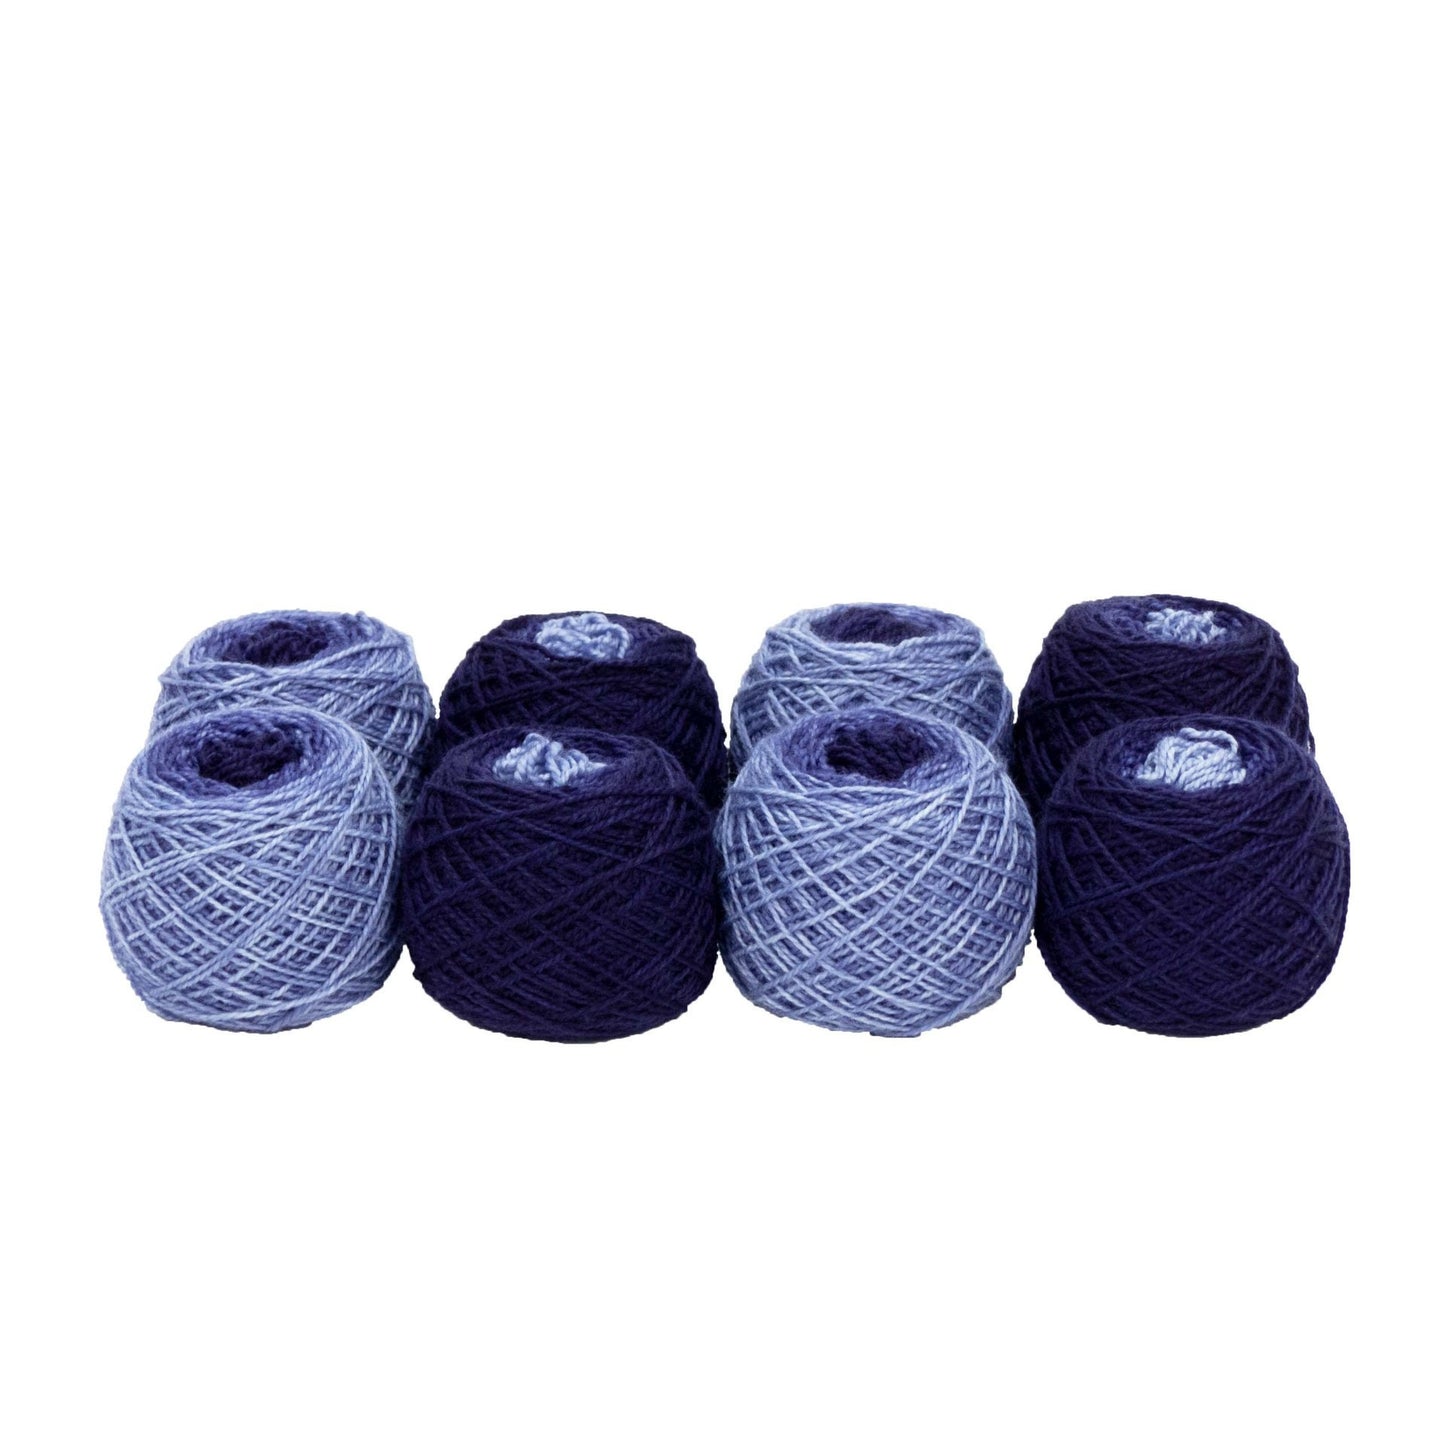 Shorty Sock Twins " Midnight Hour " - Lleap SW Merino/Nylon Handpainted Semisolid Gradient Sock Yarn Set